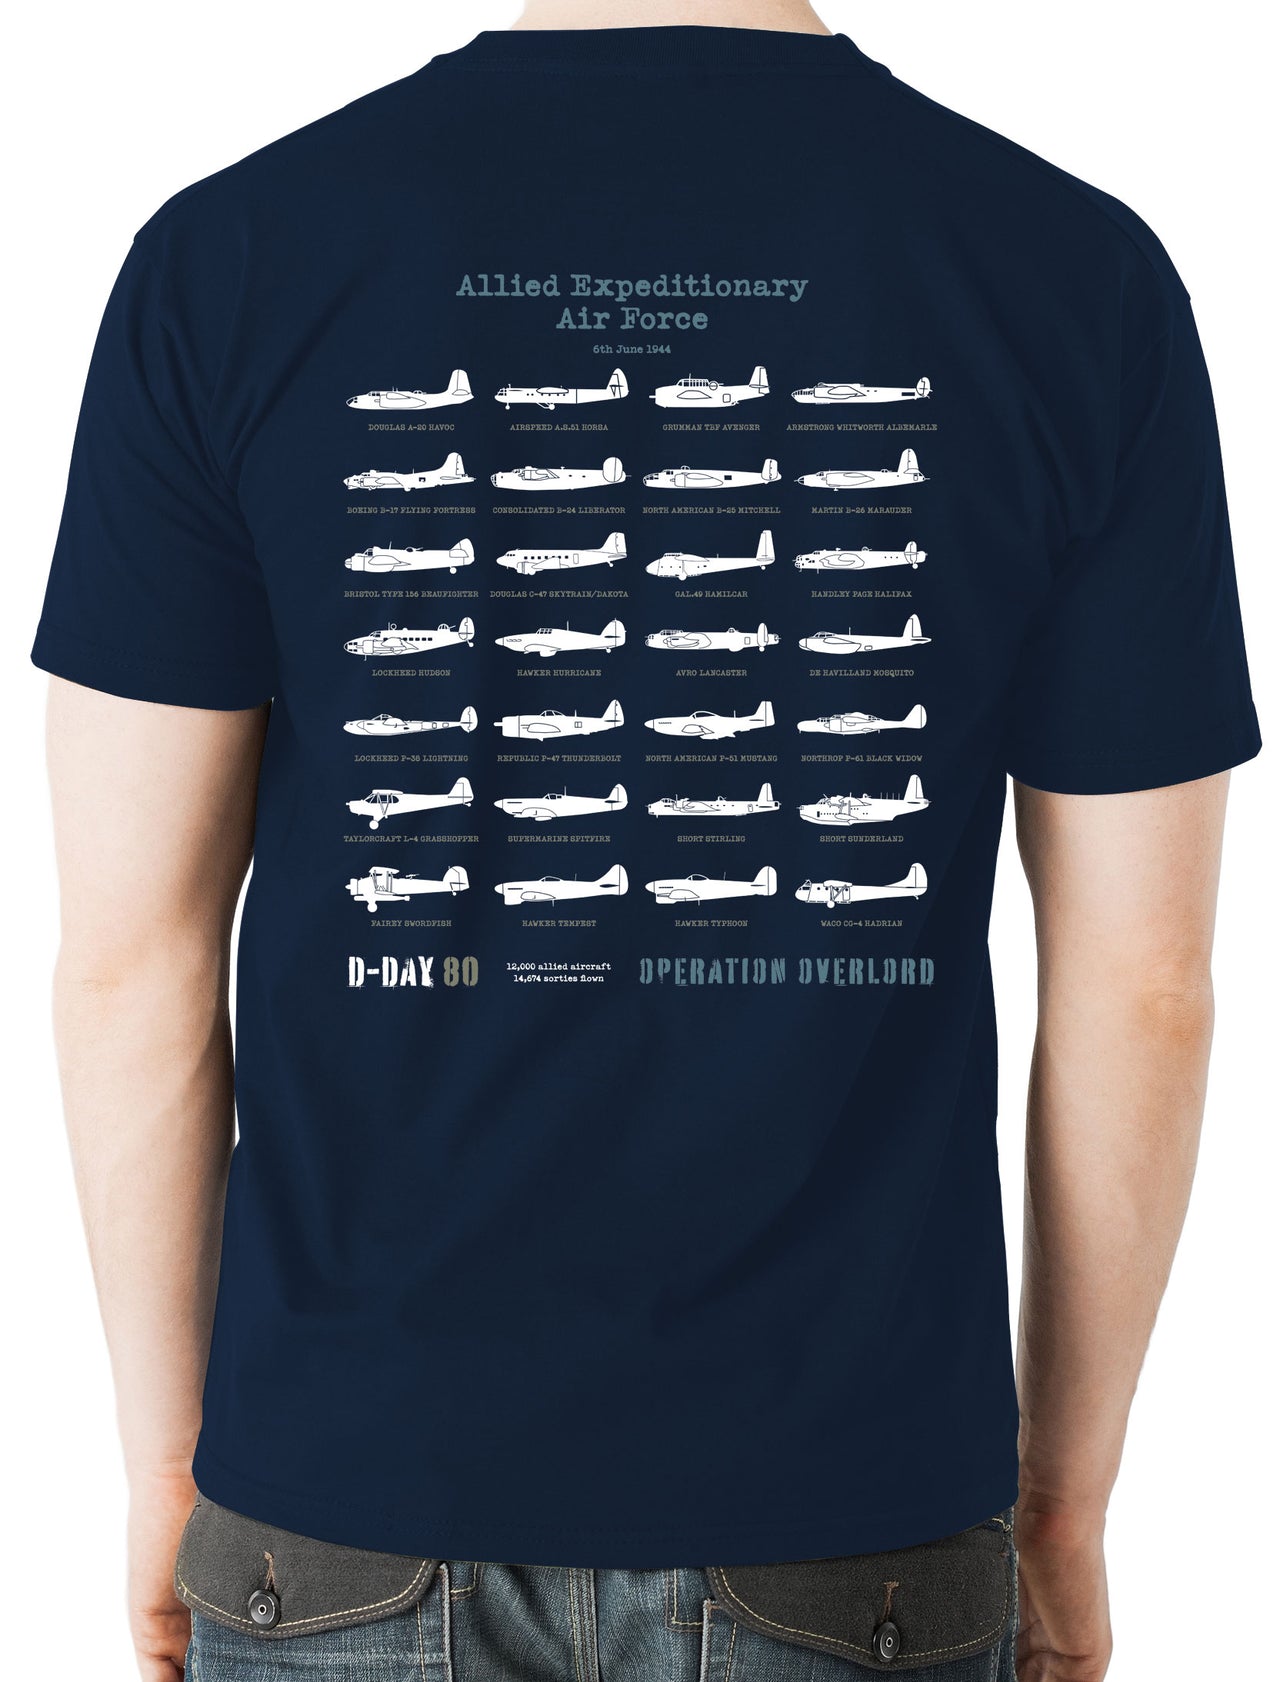 D-Day Avenger - T-shirt